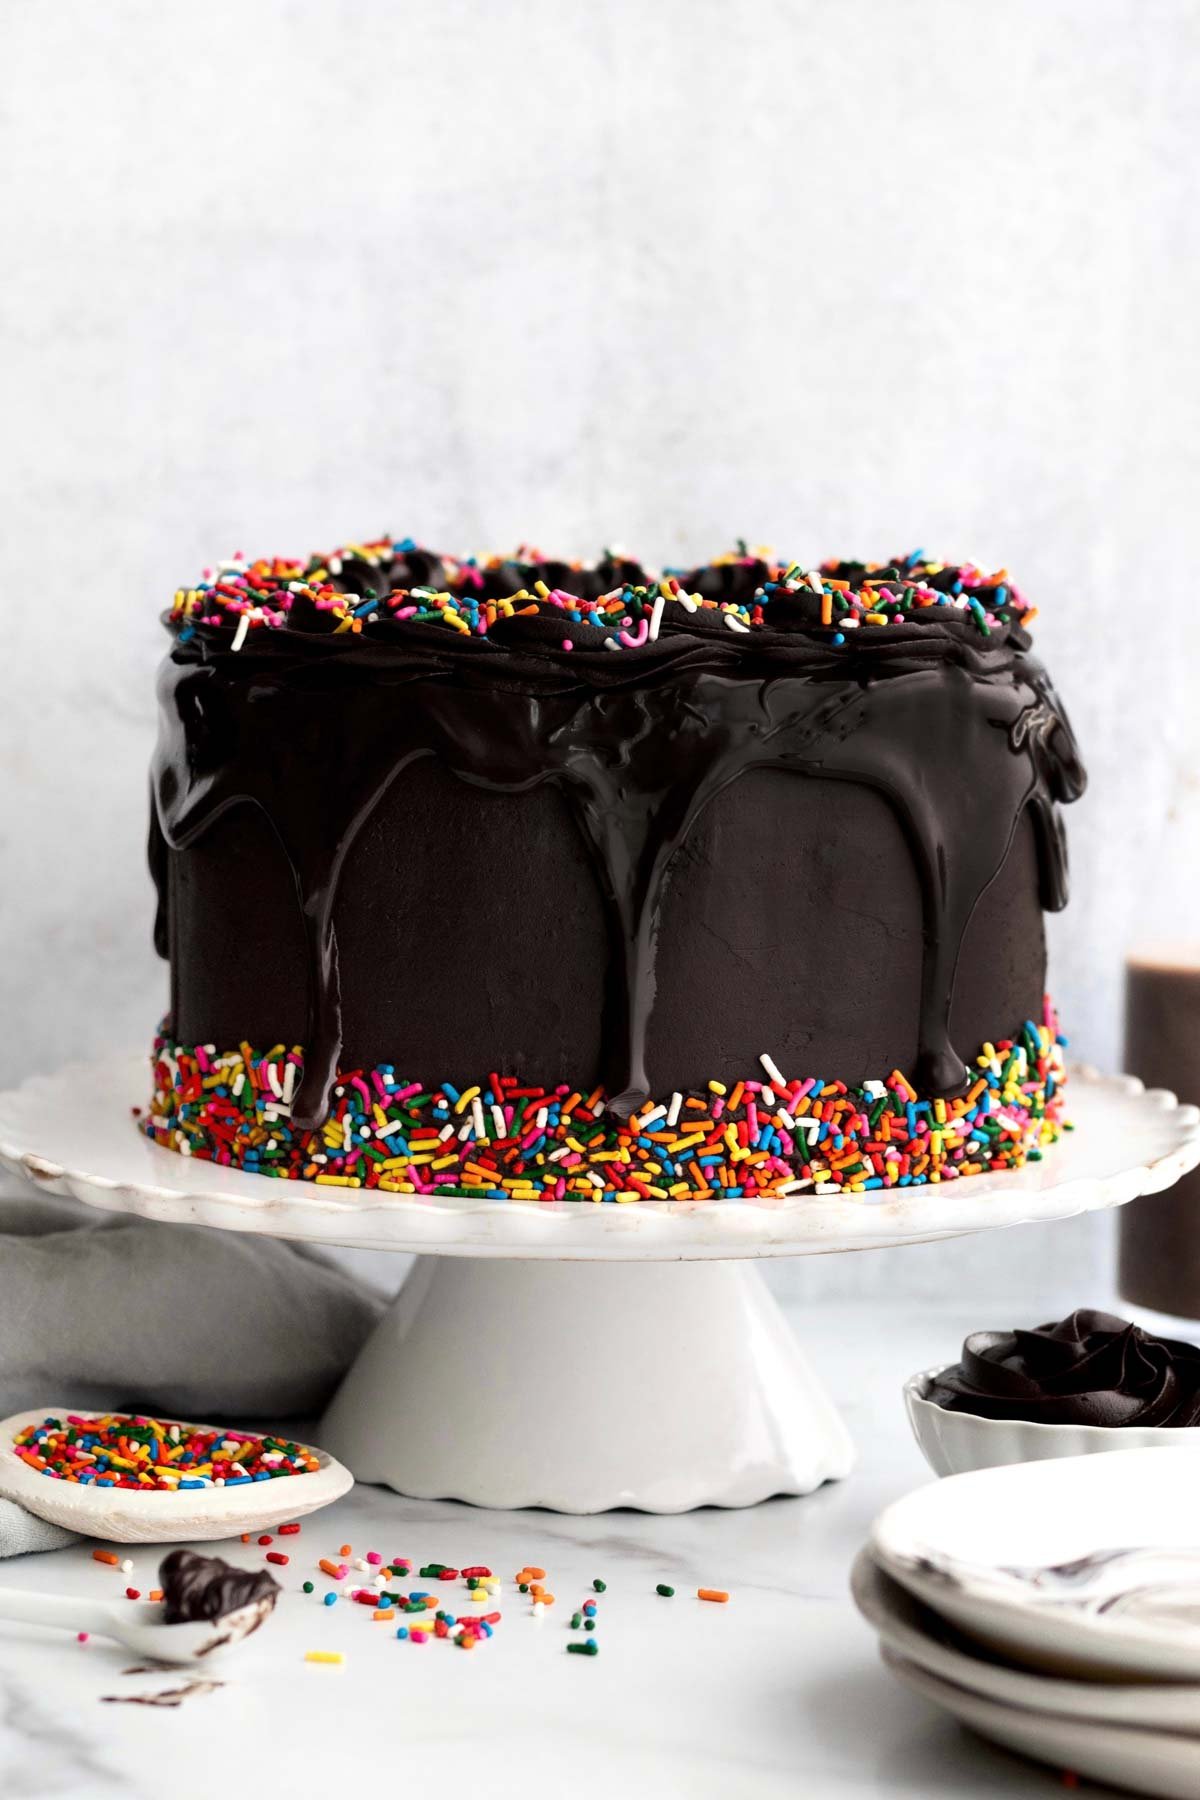 A Chocolate Sprinkle Cake on a cake stand.